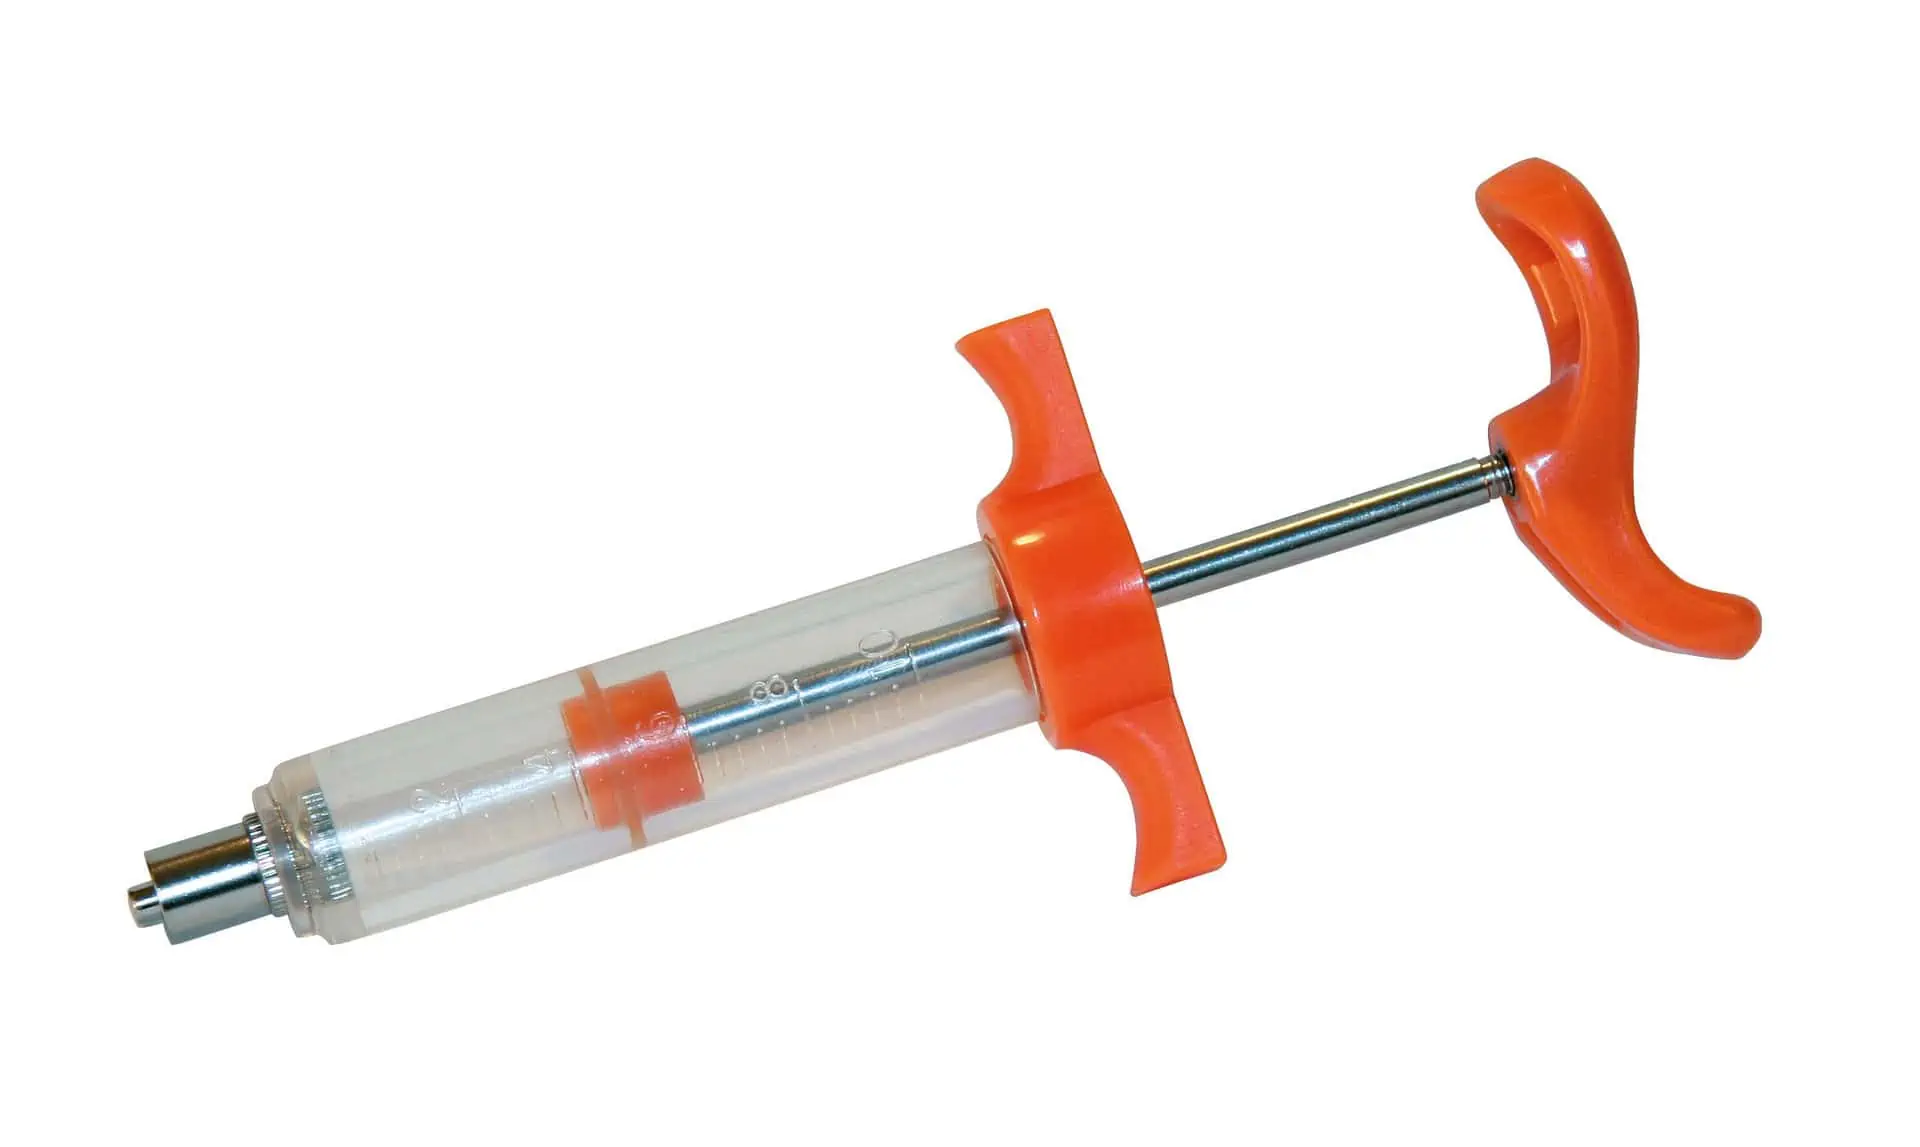 Nylon dosing syringe LuerLock with plastic handle